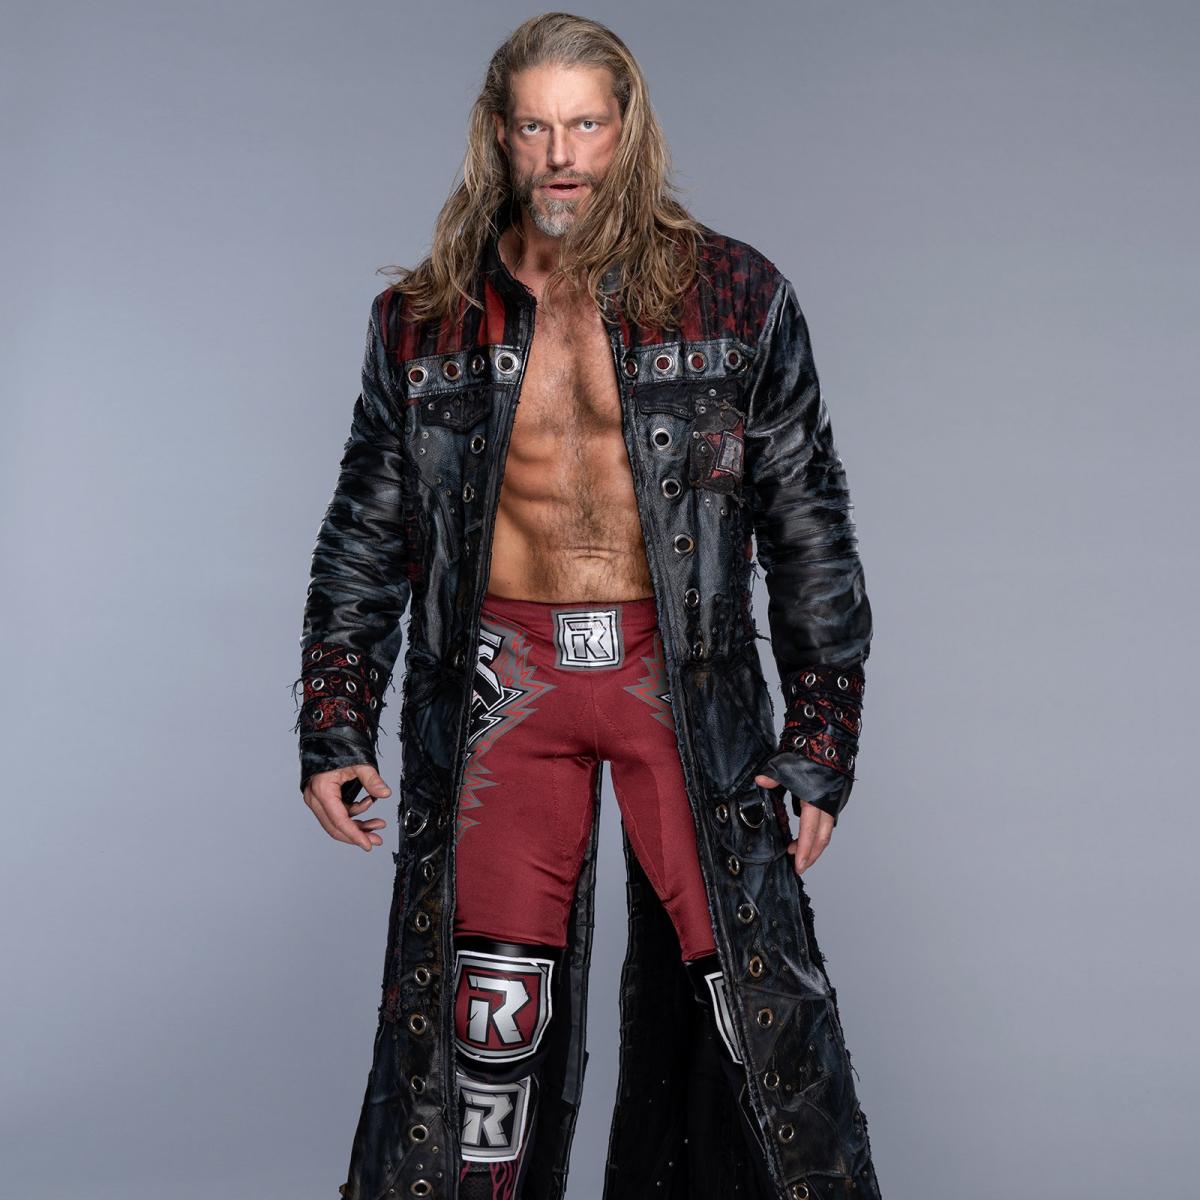 Edge's return photo shoot: photo